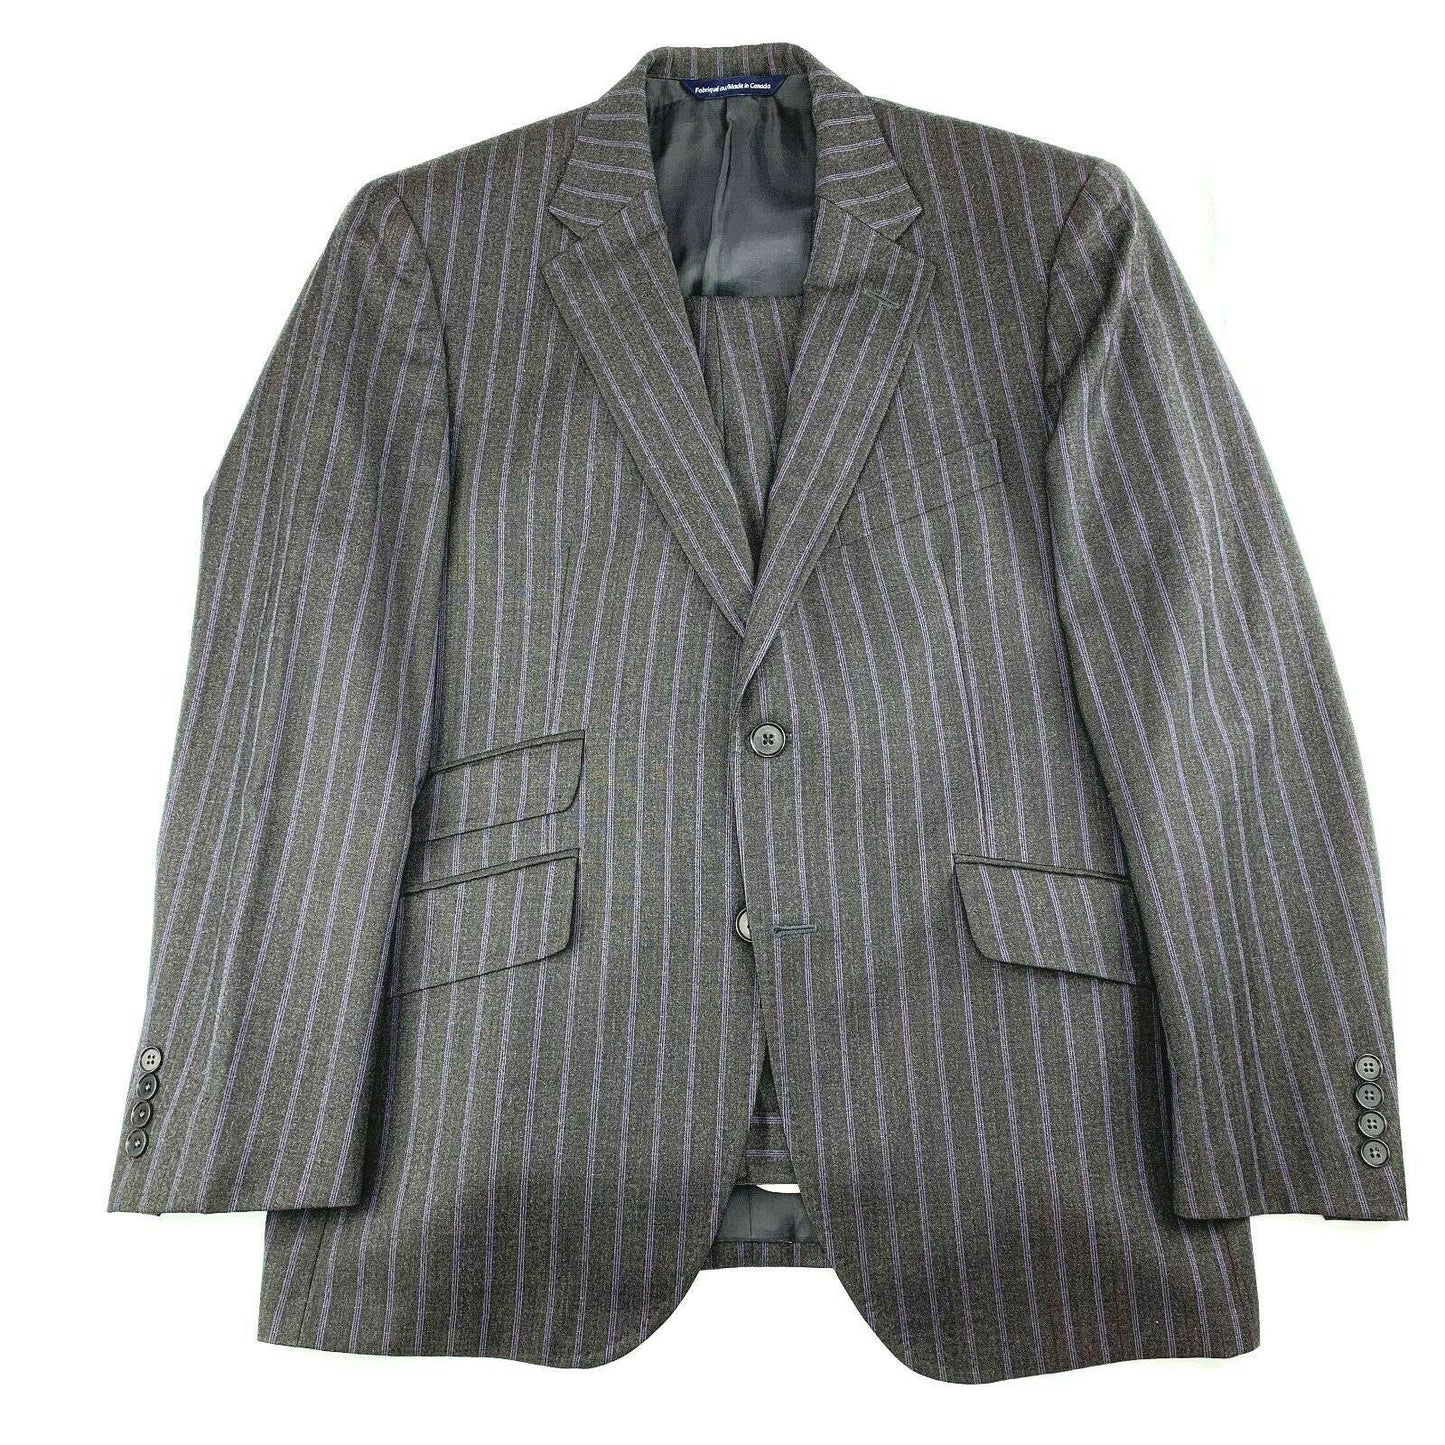 Coppley Suit Dark Grey Blue Stripe 40S Jacket 34W 30L Pant Reda Cloth - Genuine Design Luxury Consignment